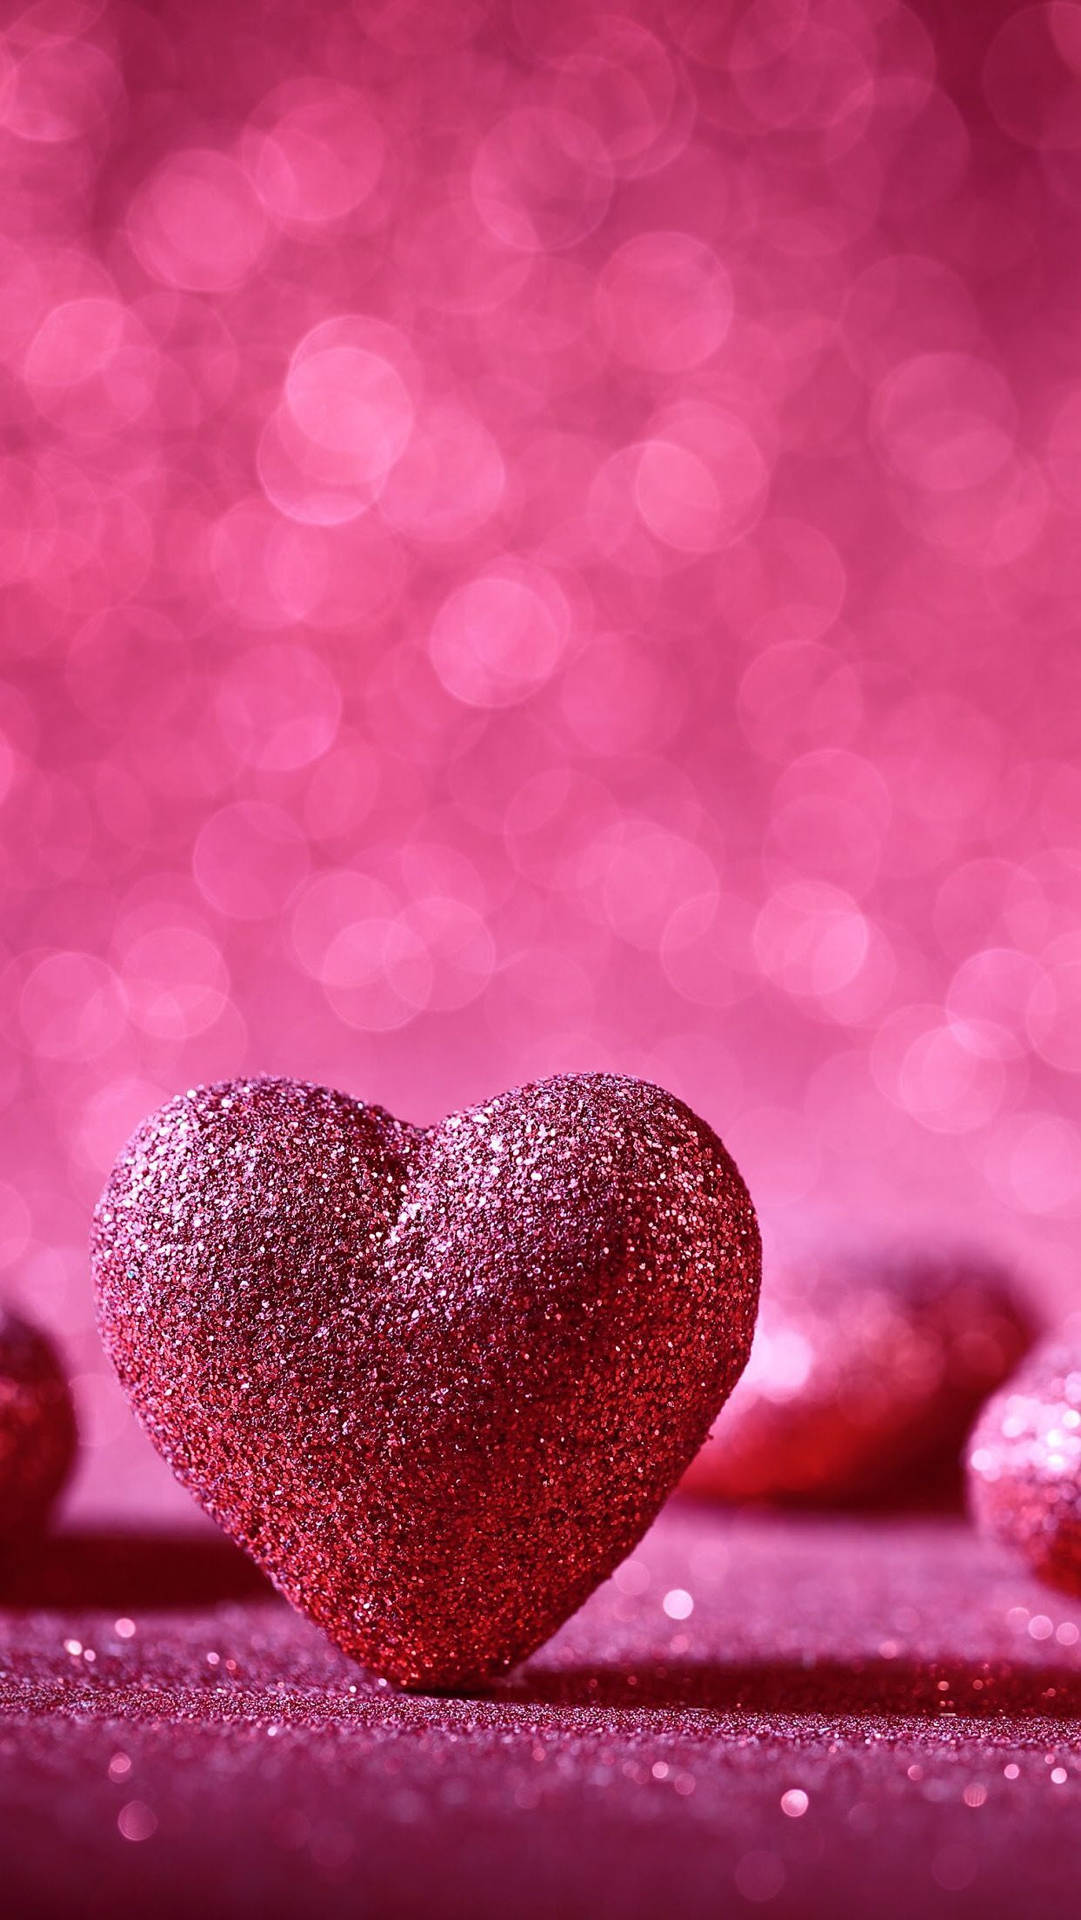 Pink Glittered Heart Love Phone Wallpaper